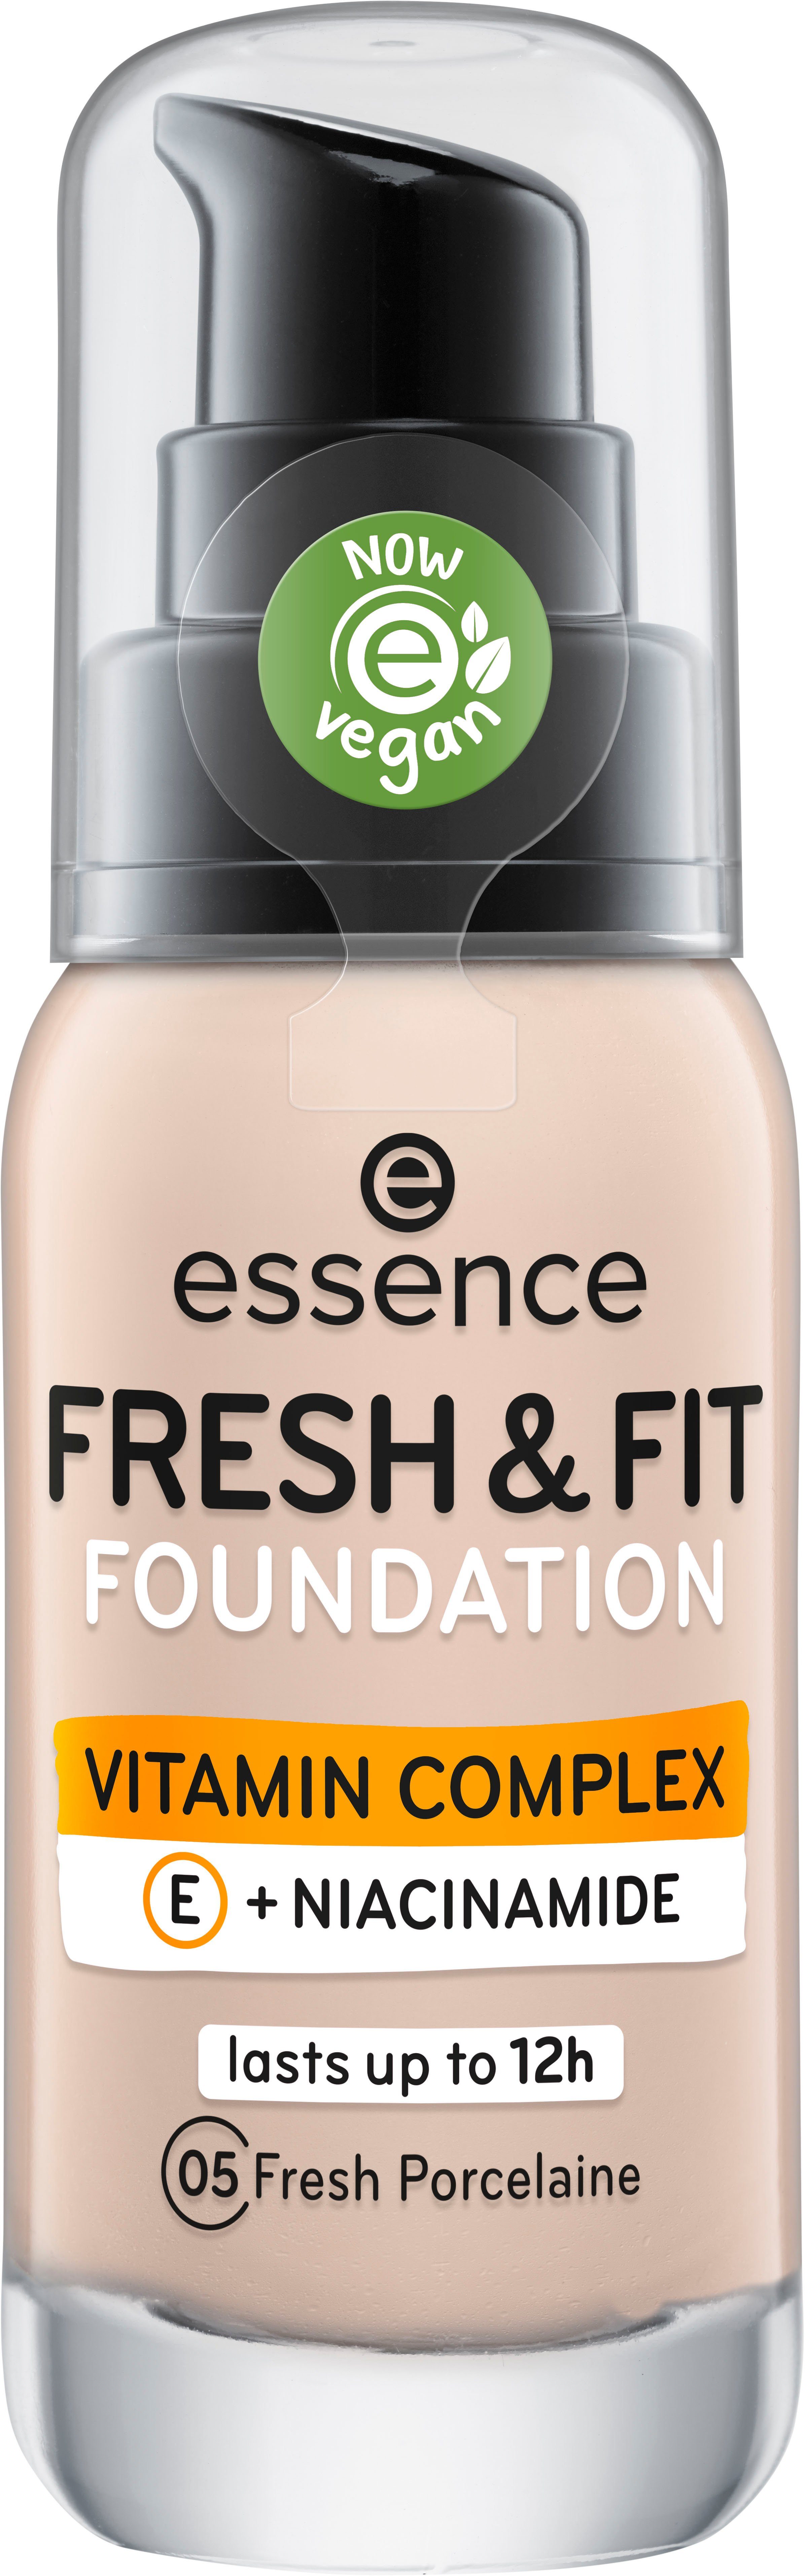 fresh 3-tlg. porcelaine FOUNDATION, & FRESH Foundation FIT Essence